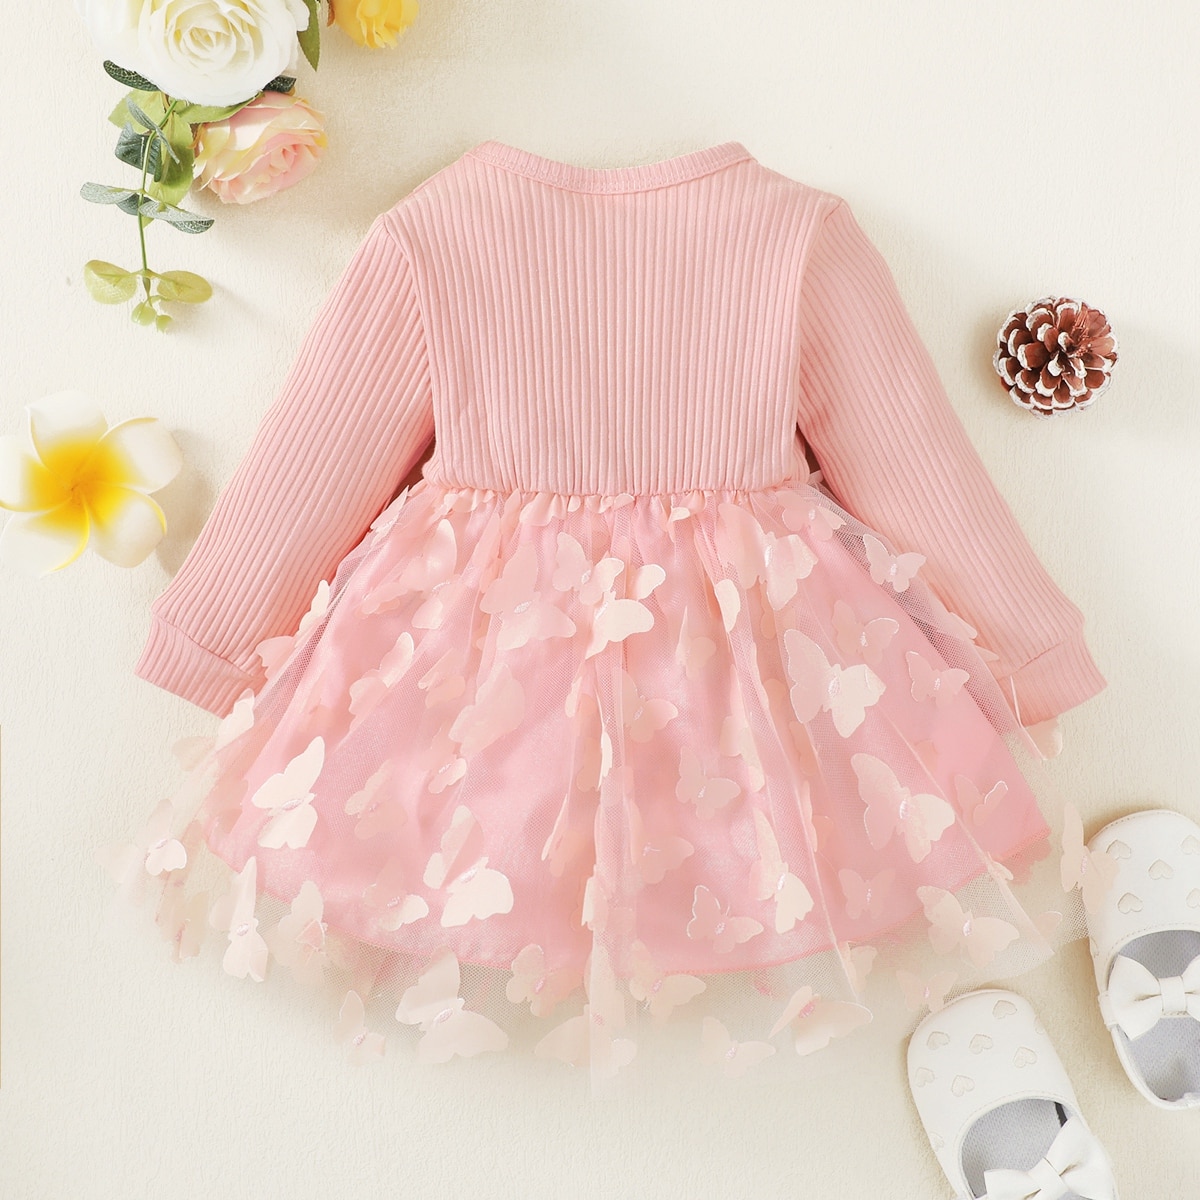 Hibobi-Baby-Bowknot-Butterfly-Decor-Mesh-Long-Sleeve-Dress-Ruffles-Lace-Bow-Princess-Dresses-Costumes-Clothes-2